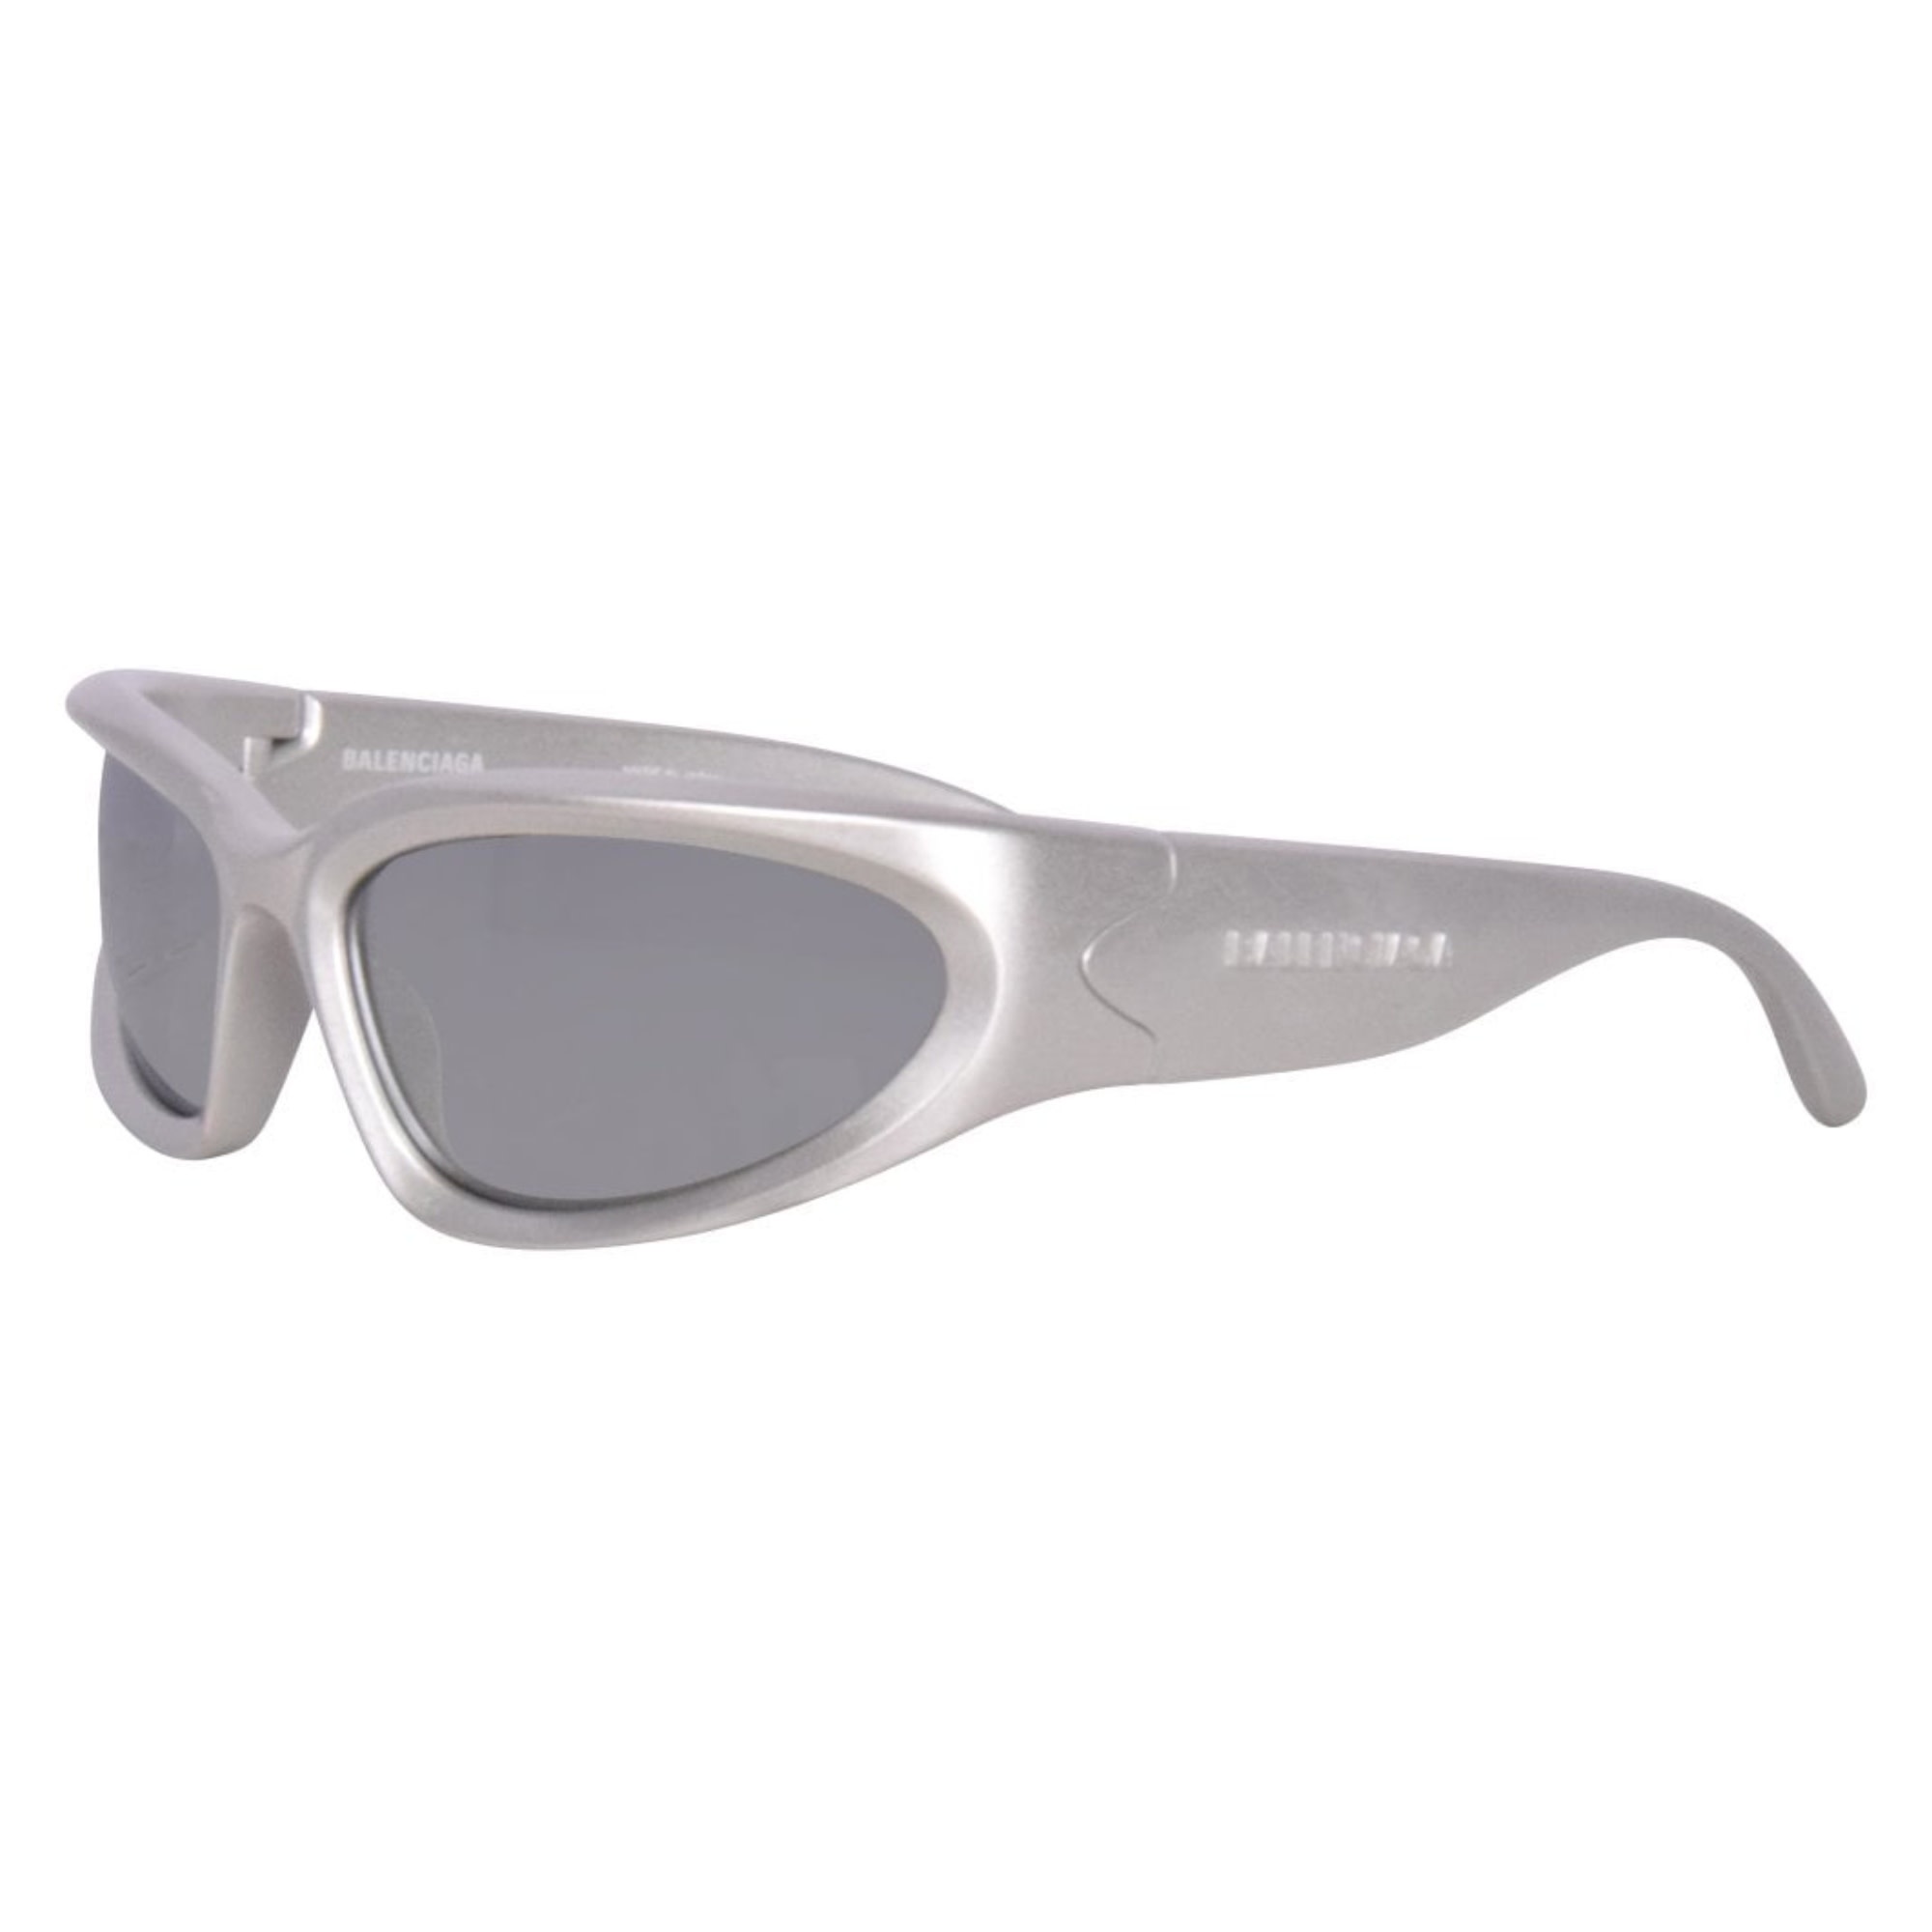 Best Shields & Wrap Around Sunglasses for Men and Women - Sunglass Picks